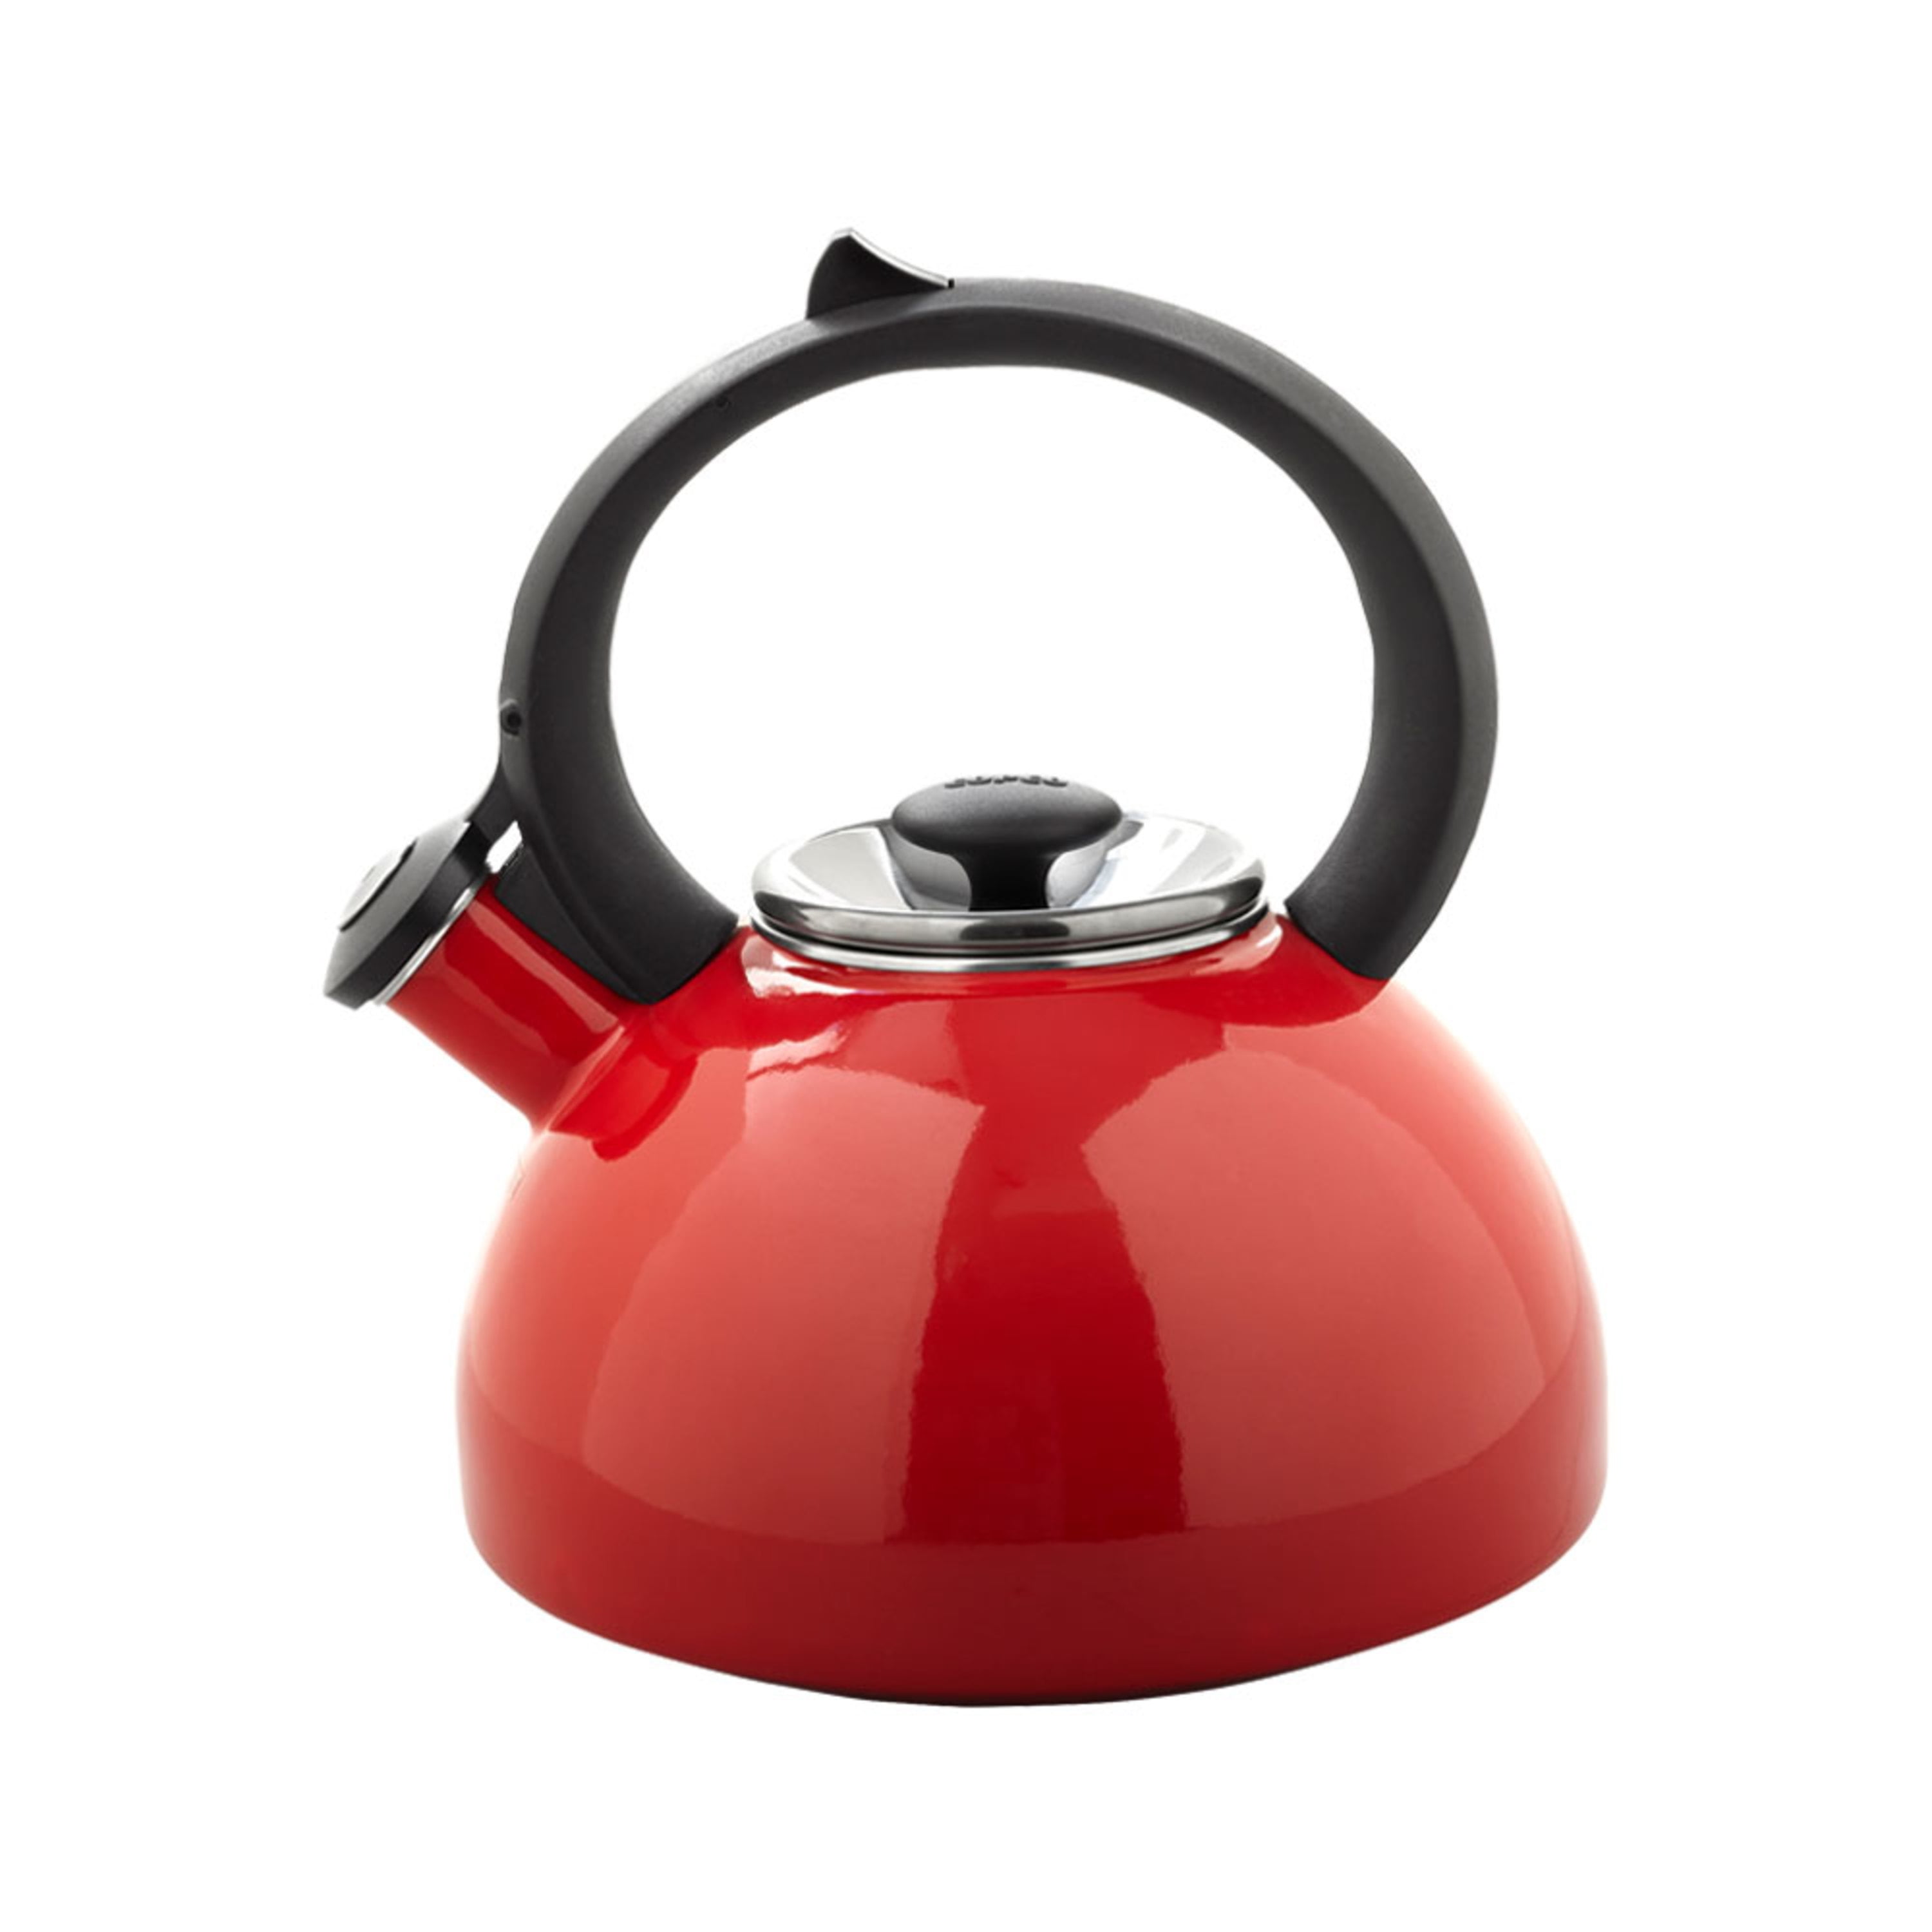 1.5 quart Copco 5239572 Vienna Tea kettle red 